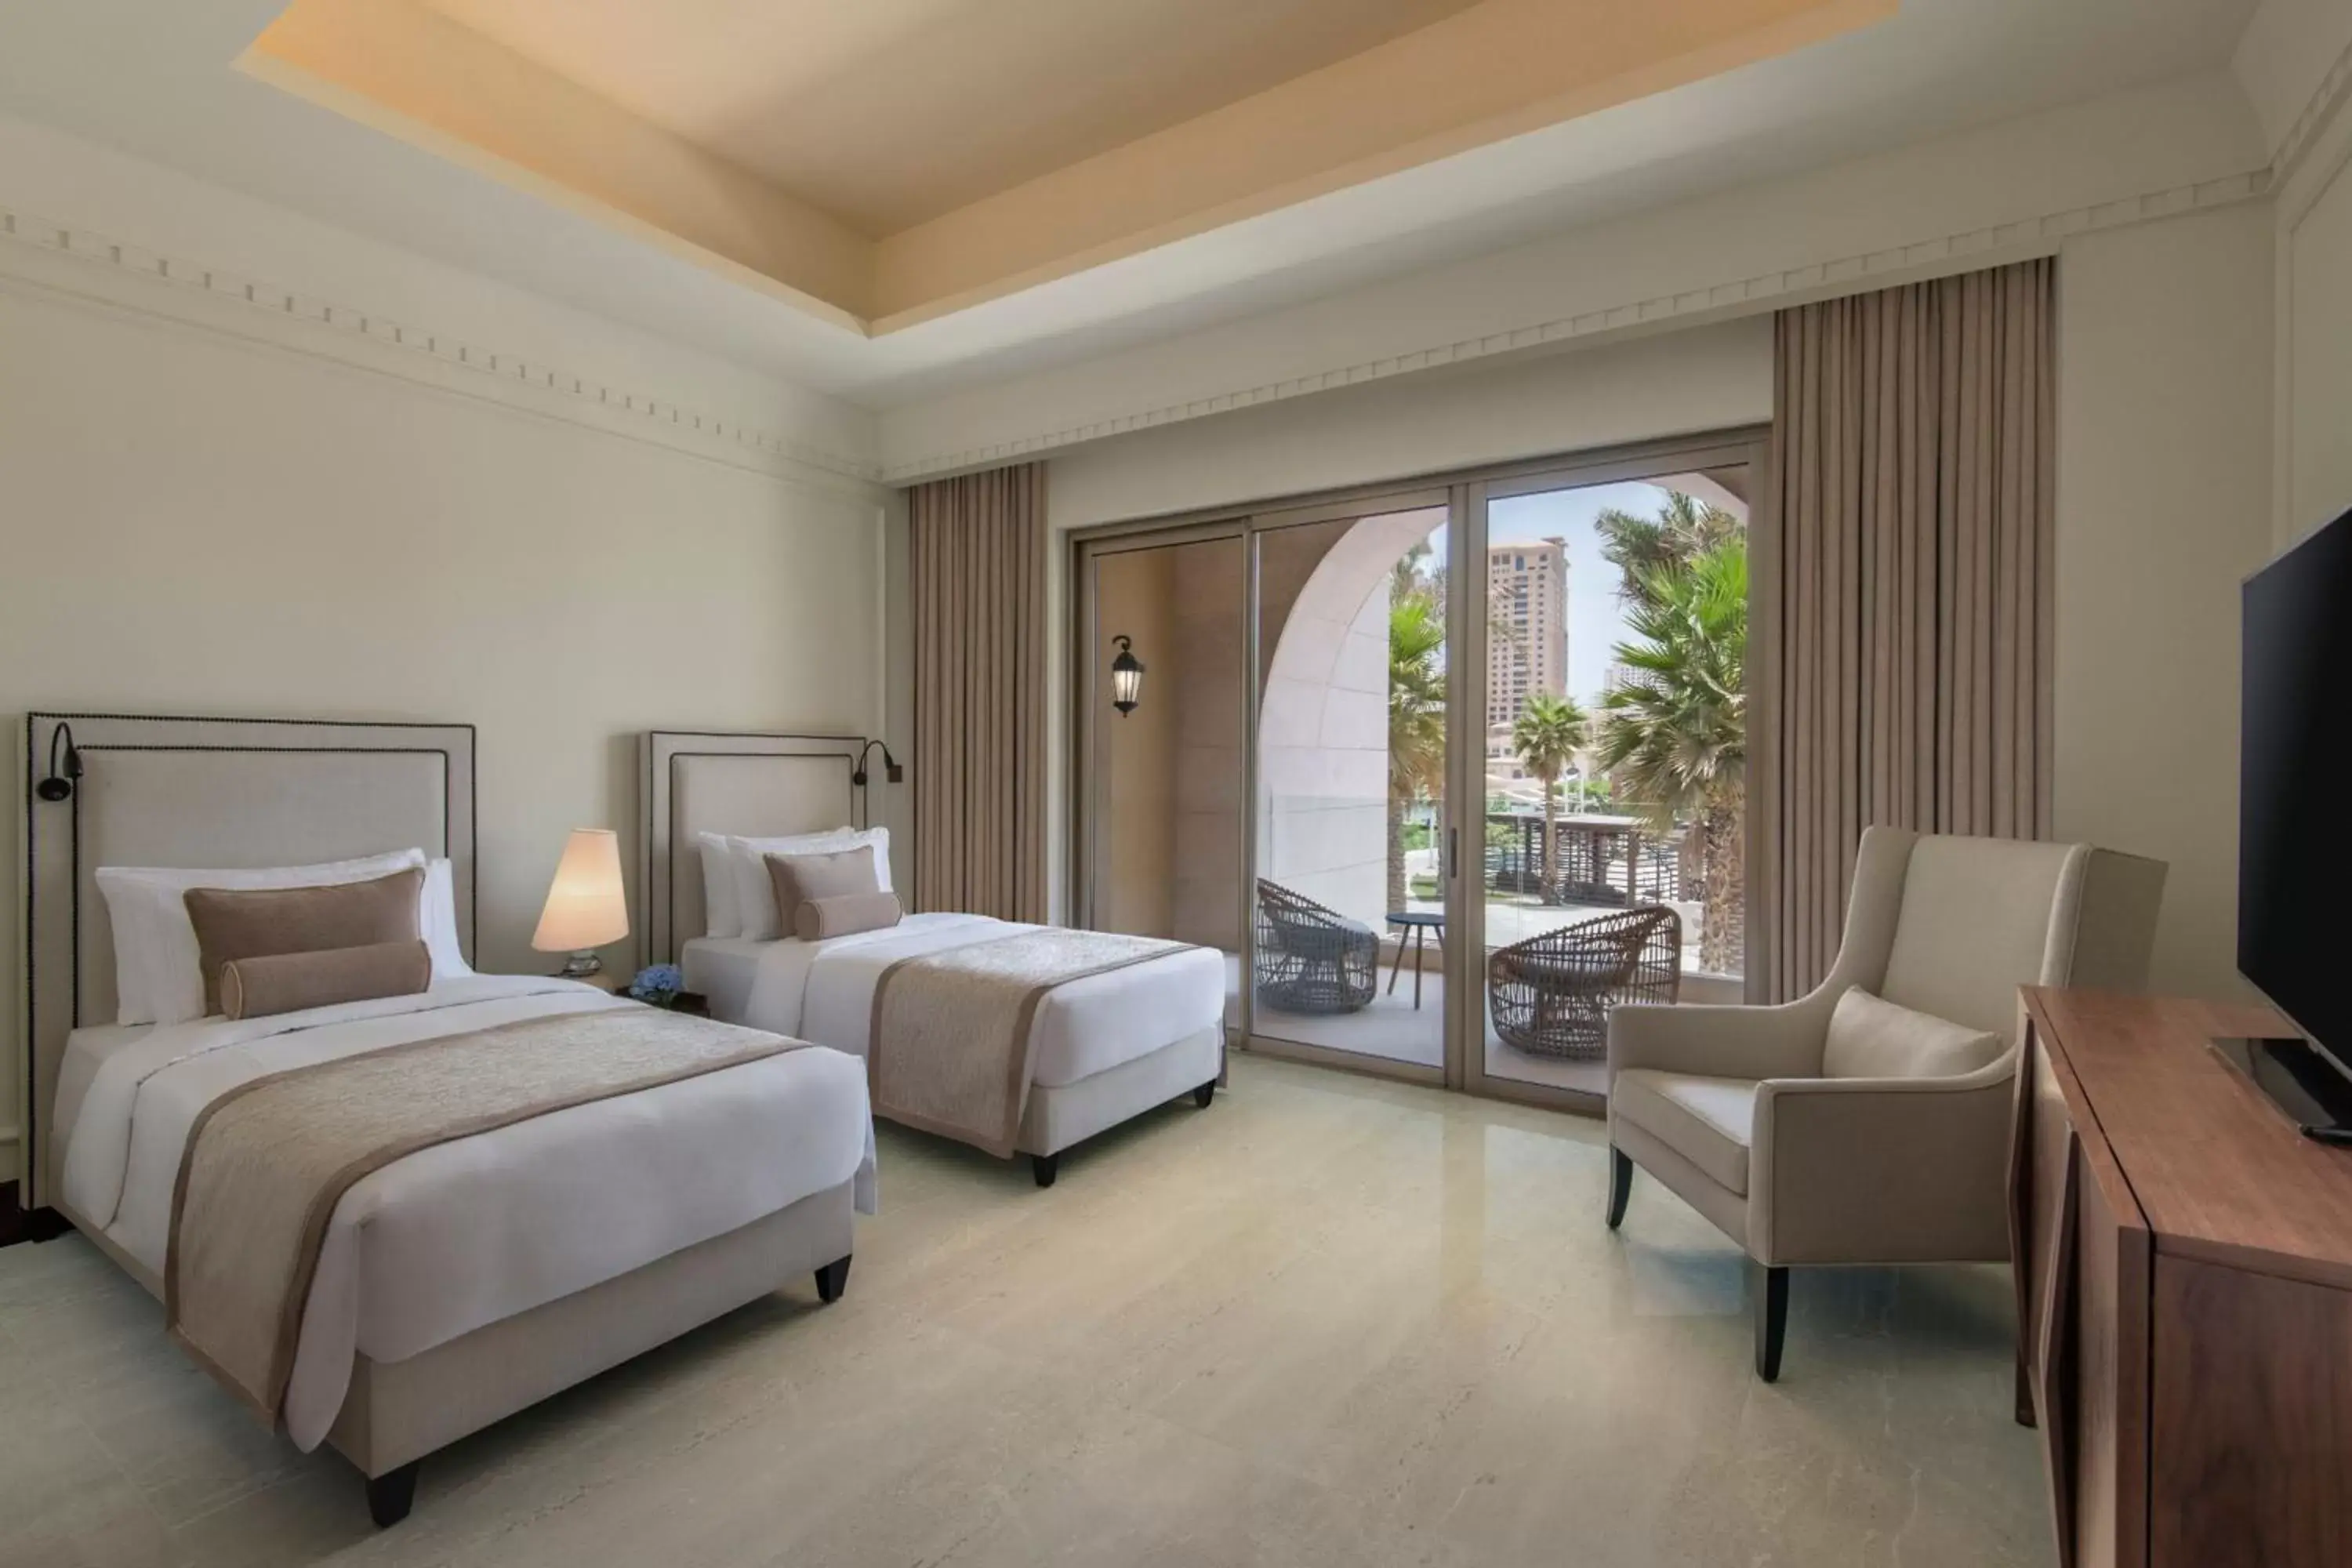 Bedroom in The St Regis Marsa Arabia Island, The Pearl Qatar